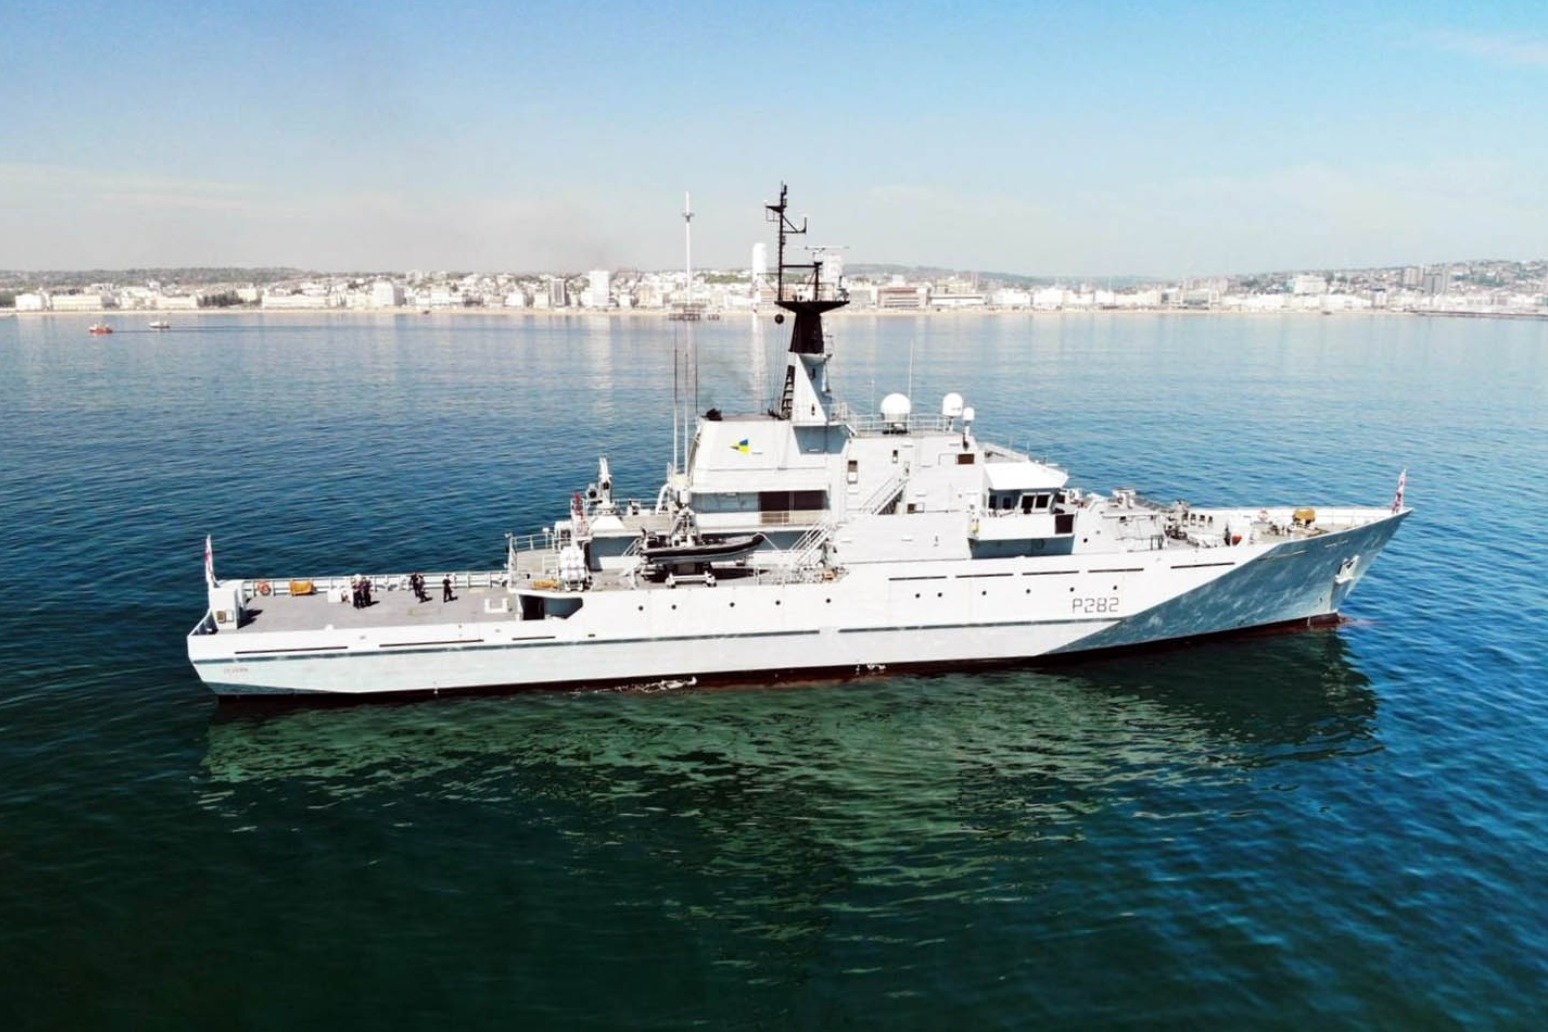 Royal Navy ships patrolling Jersey amid post-Brexit fishing rights row 